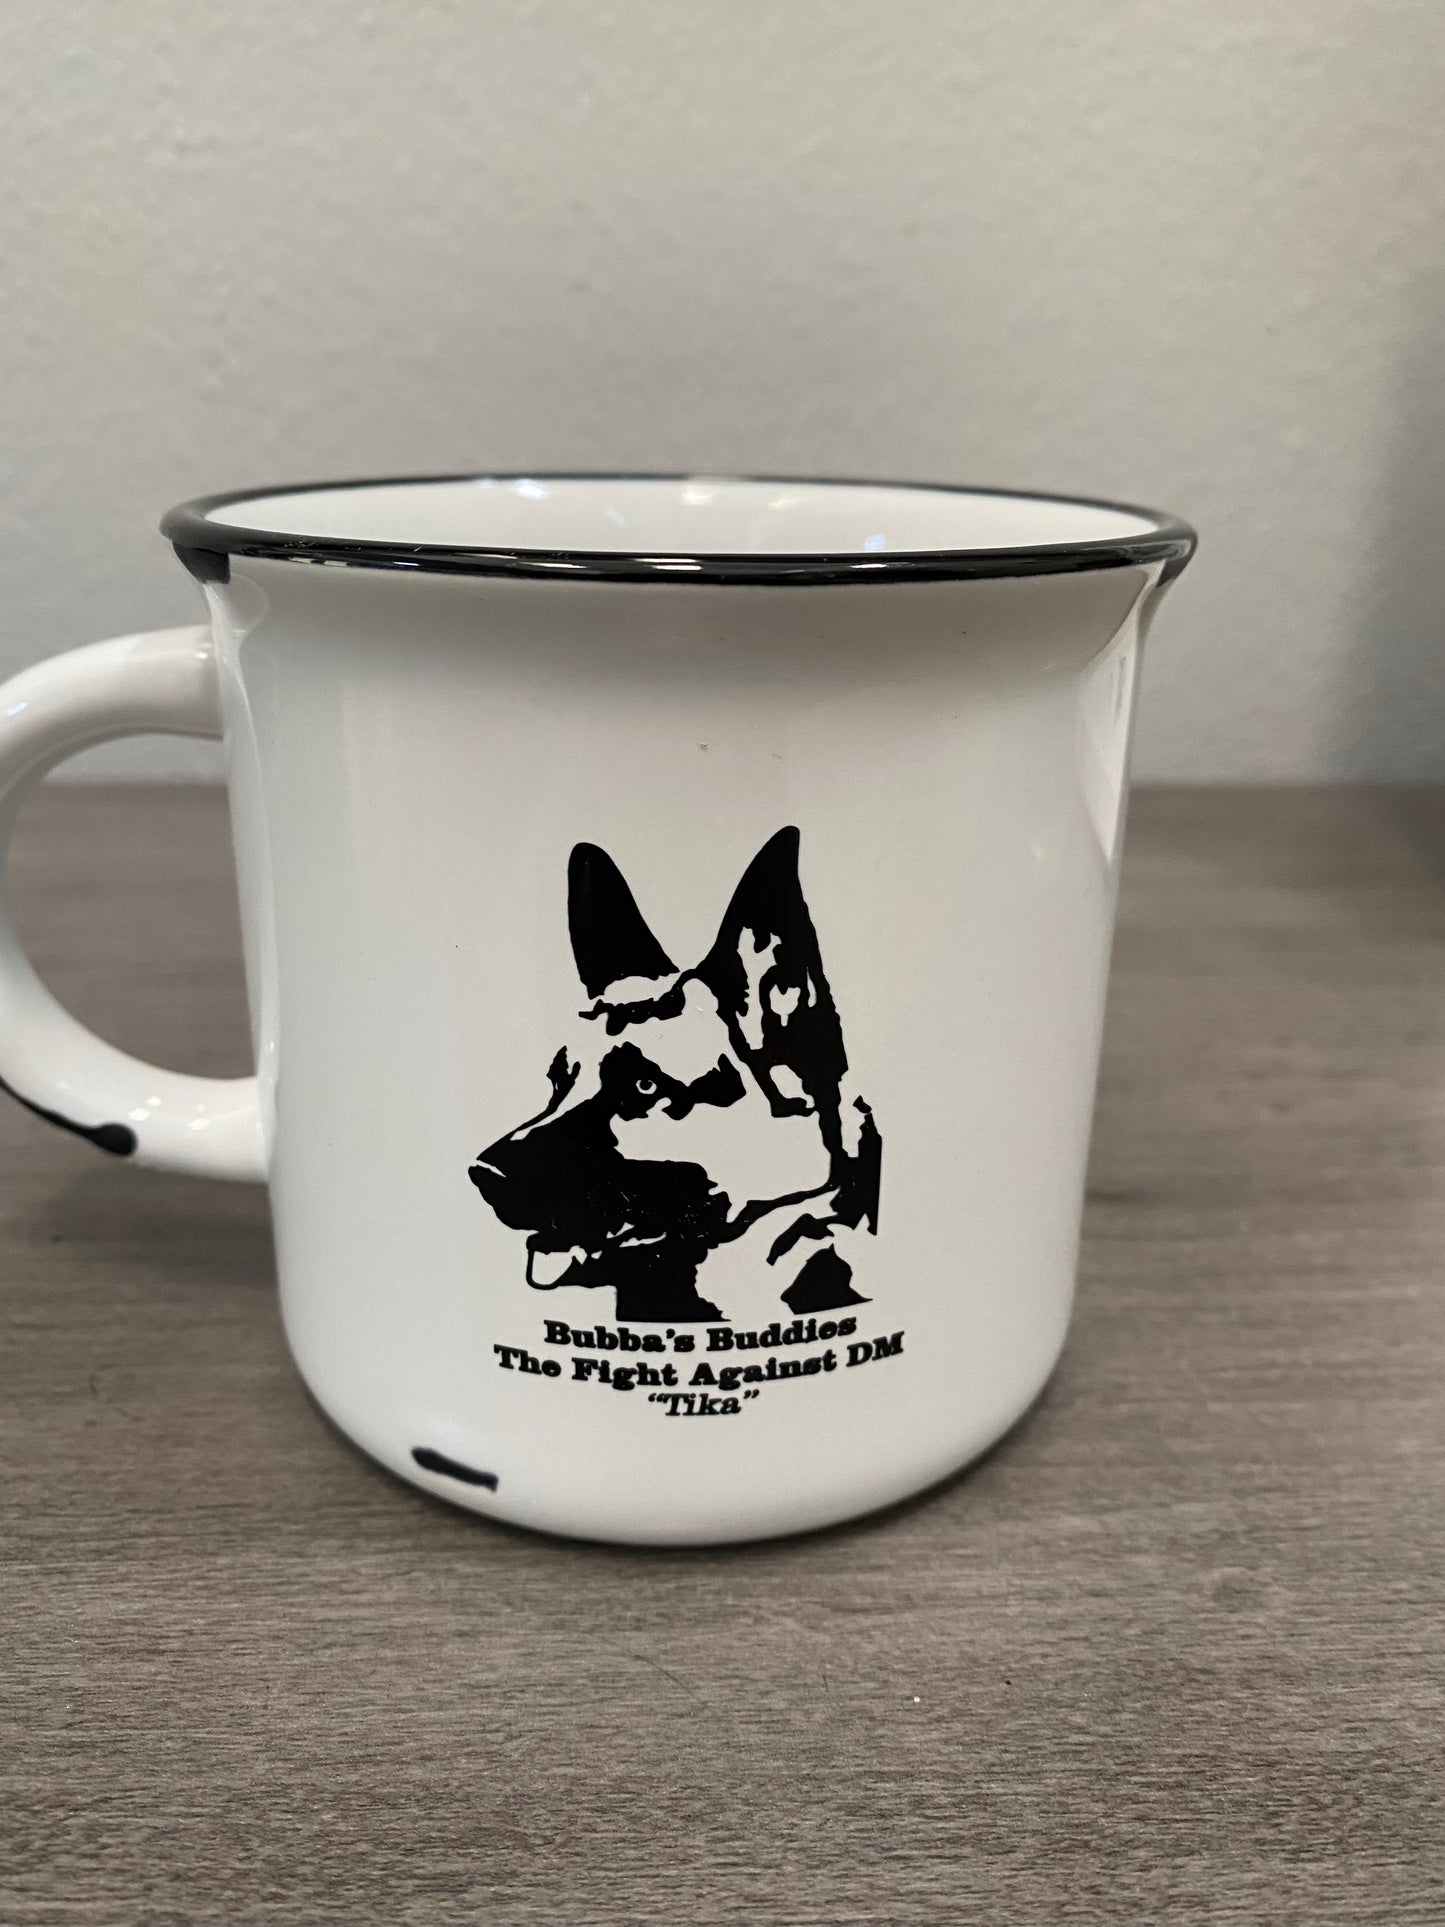 German Shepherd (Tika) "The Fight Against DM" Coffee Mug